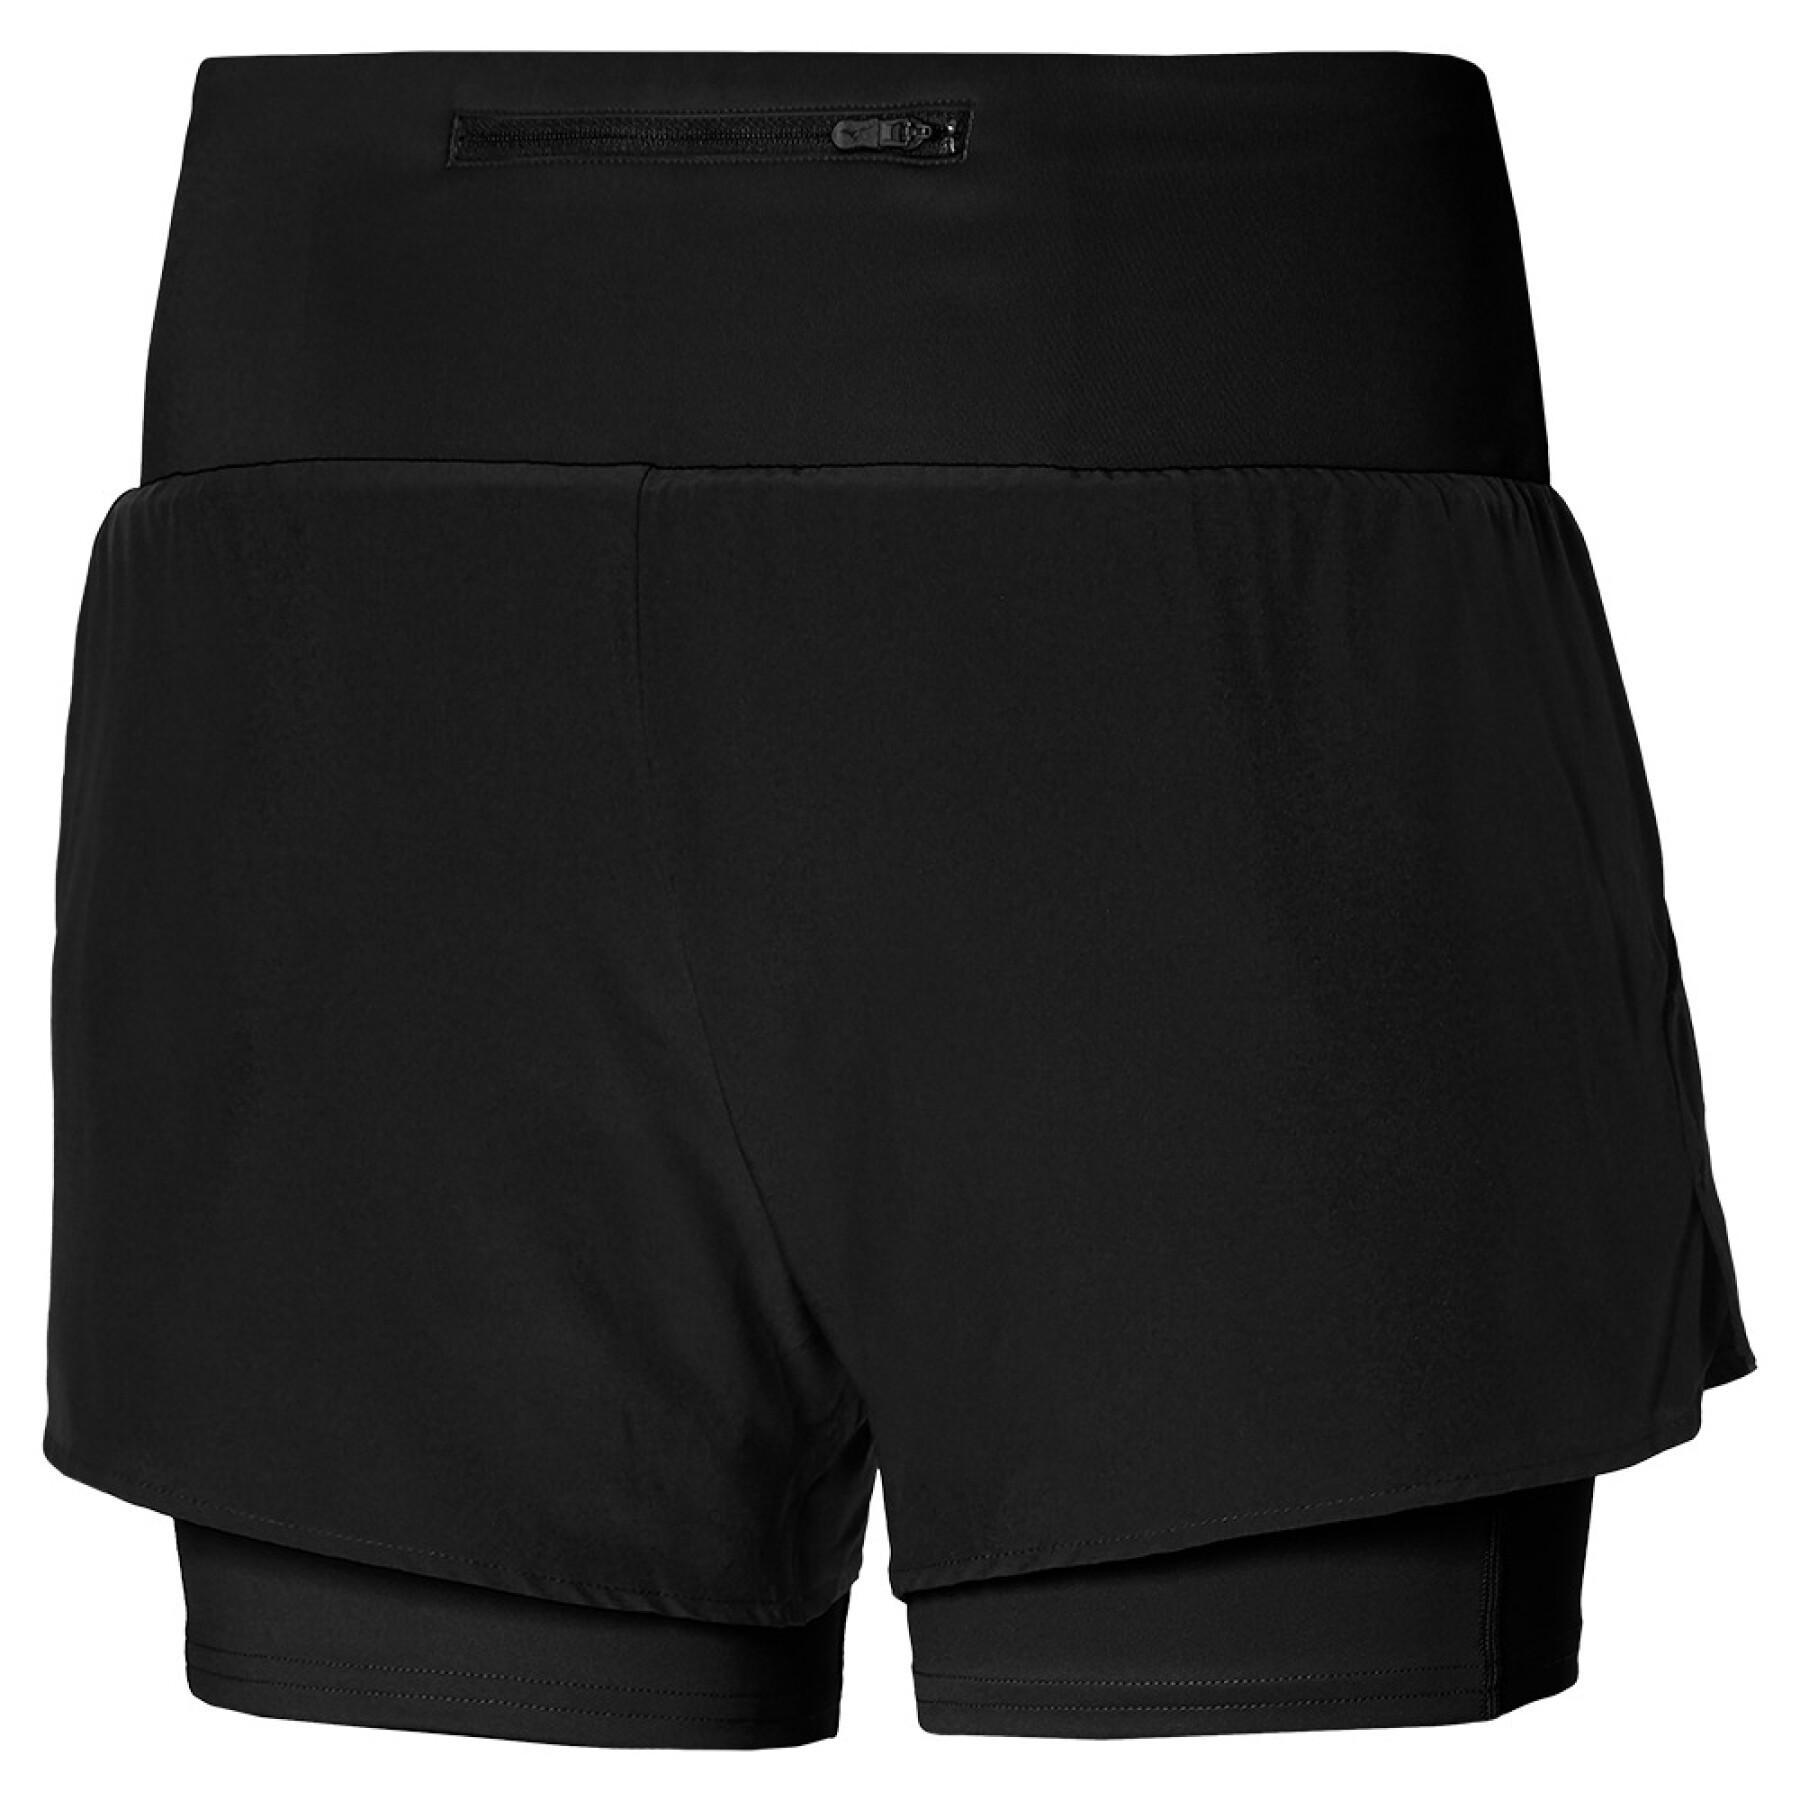 Women's shorts Mizuno 2in1 4.5